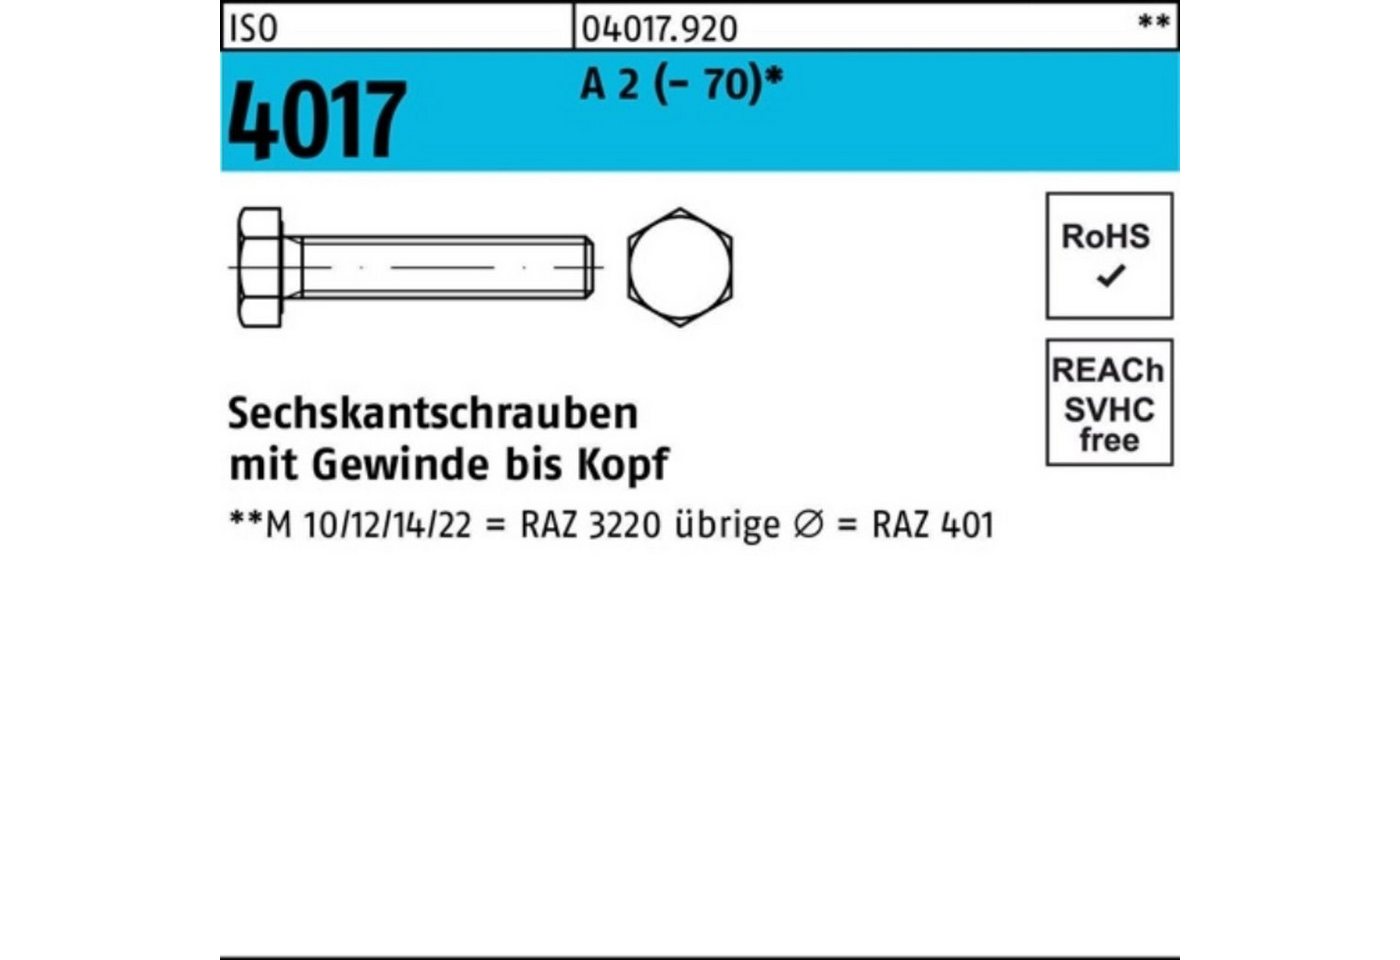 Bufab Sechskantschraube 100er Pack Sechskantschraube ISO 4017 VG M27x 60 A 2 (70) 1 Stück I von Bufab